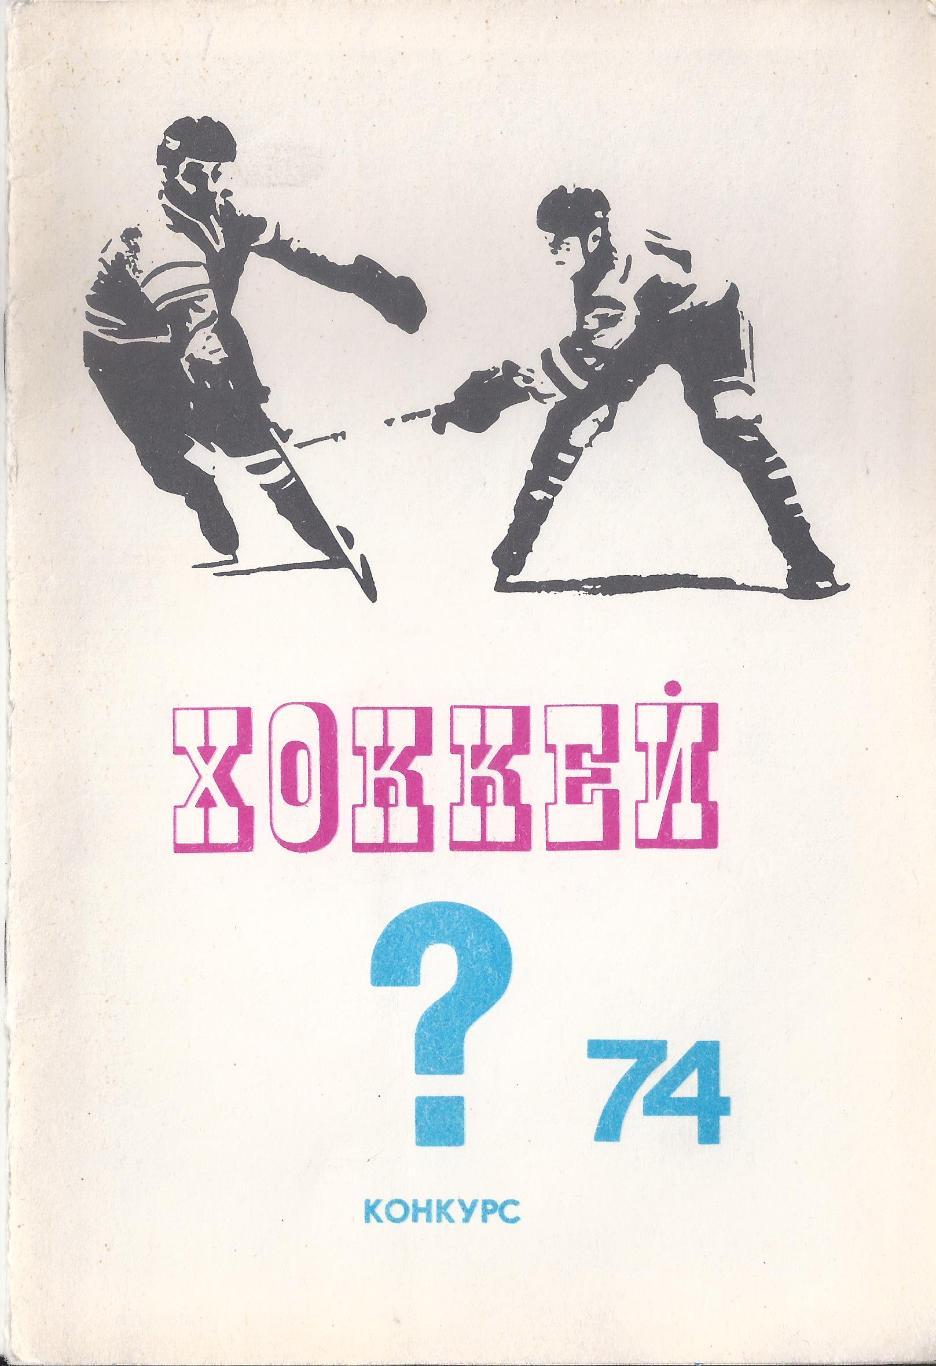 Конкурс Хоккей 1974